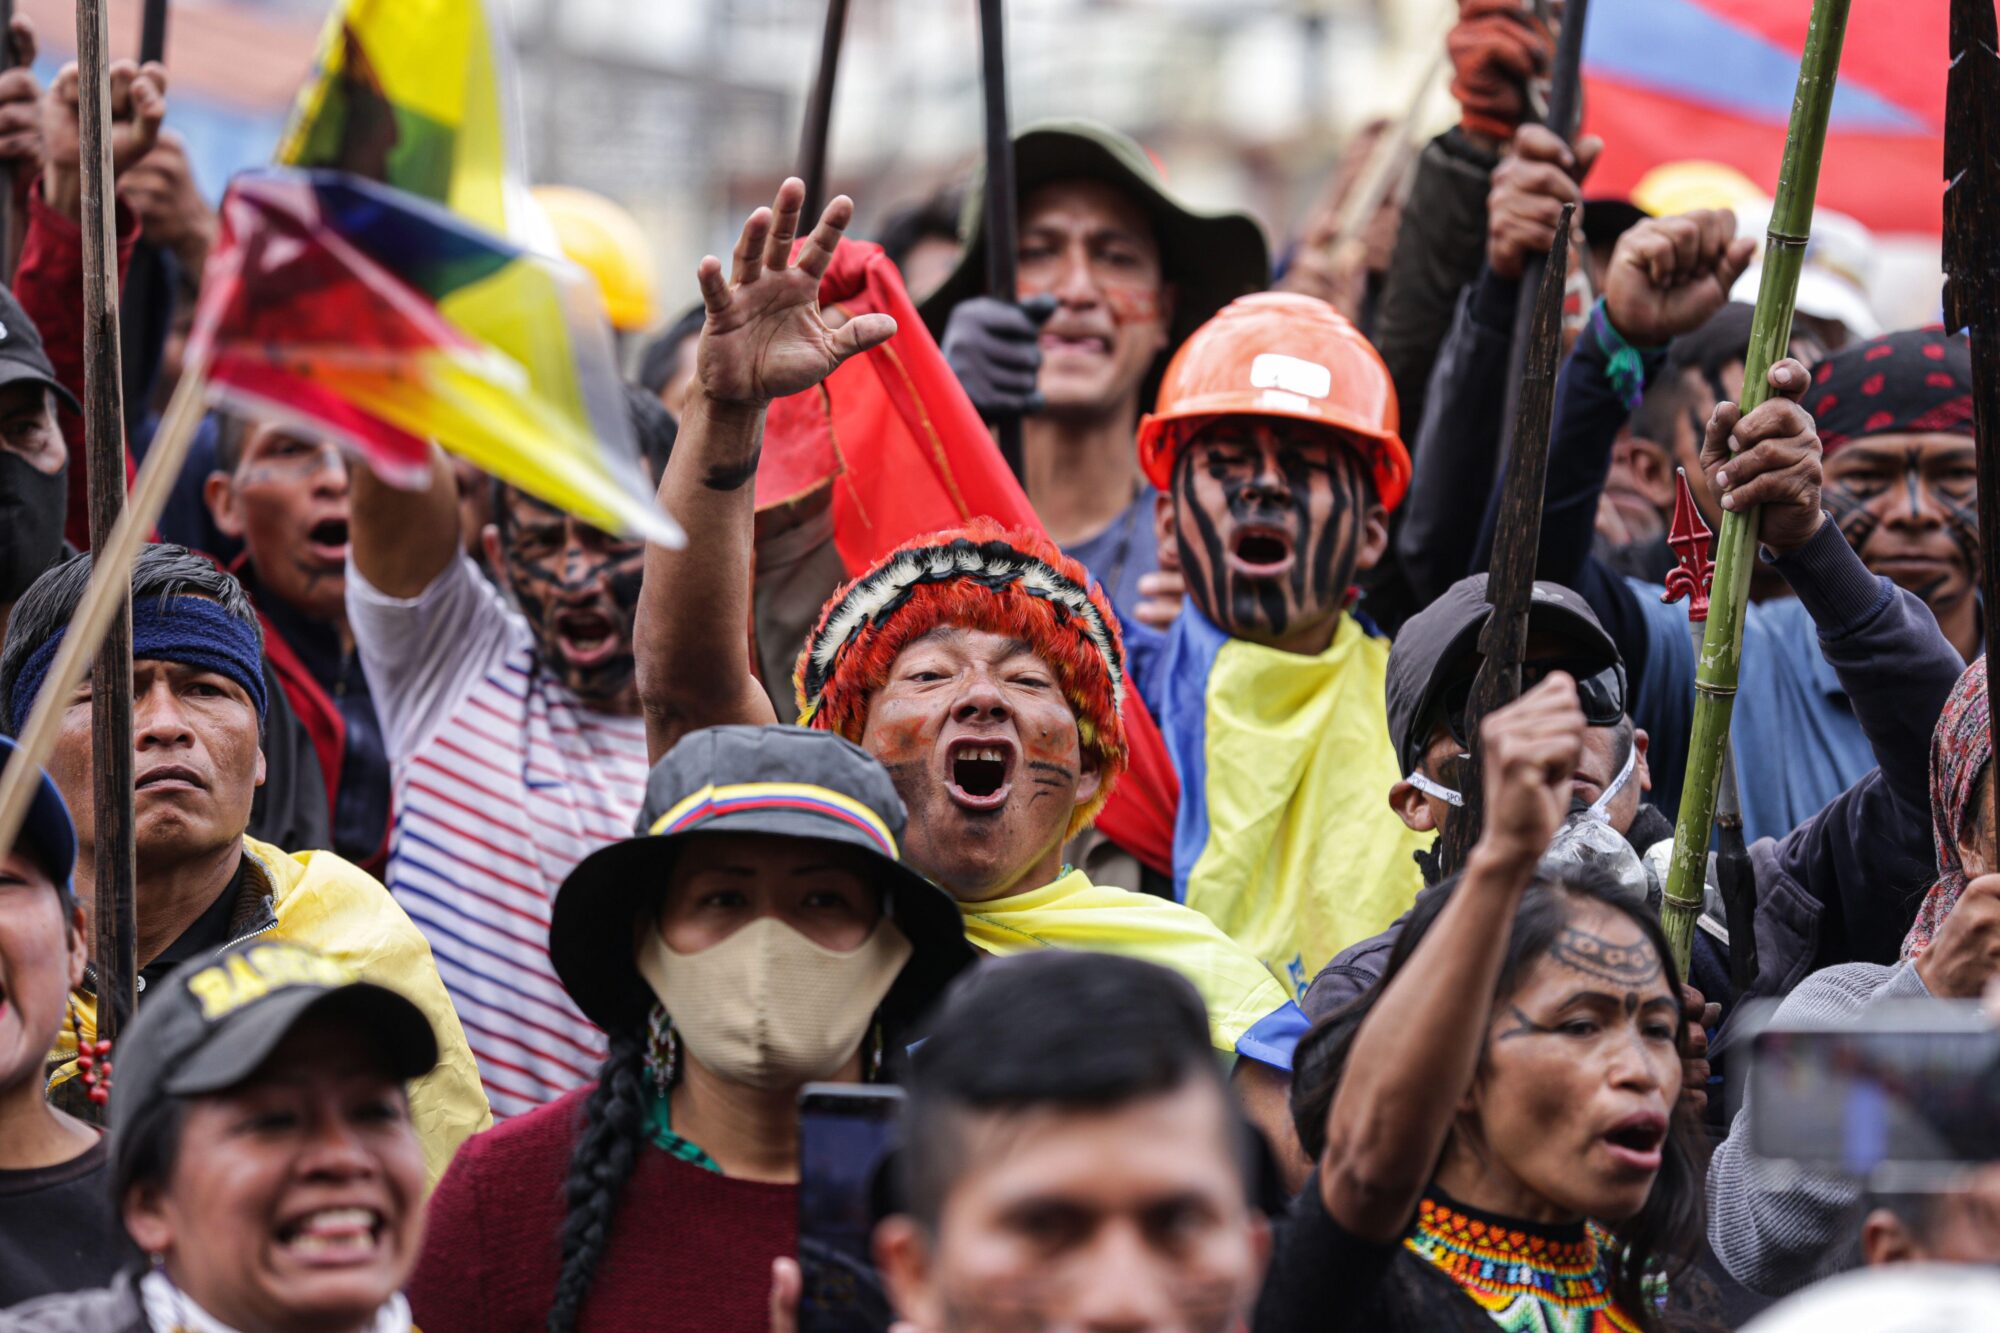 Indigenous protestors in Quito, Ecuador (photo credit: Joaquin Montenegro Humanante/dpa/Alamy)